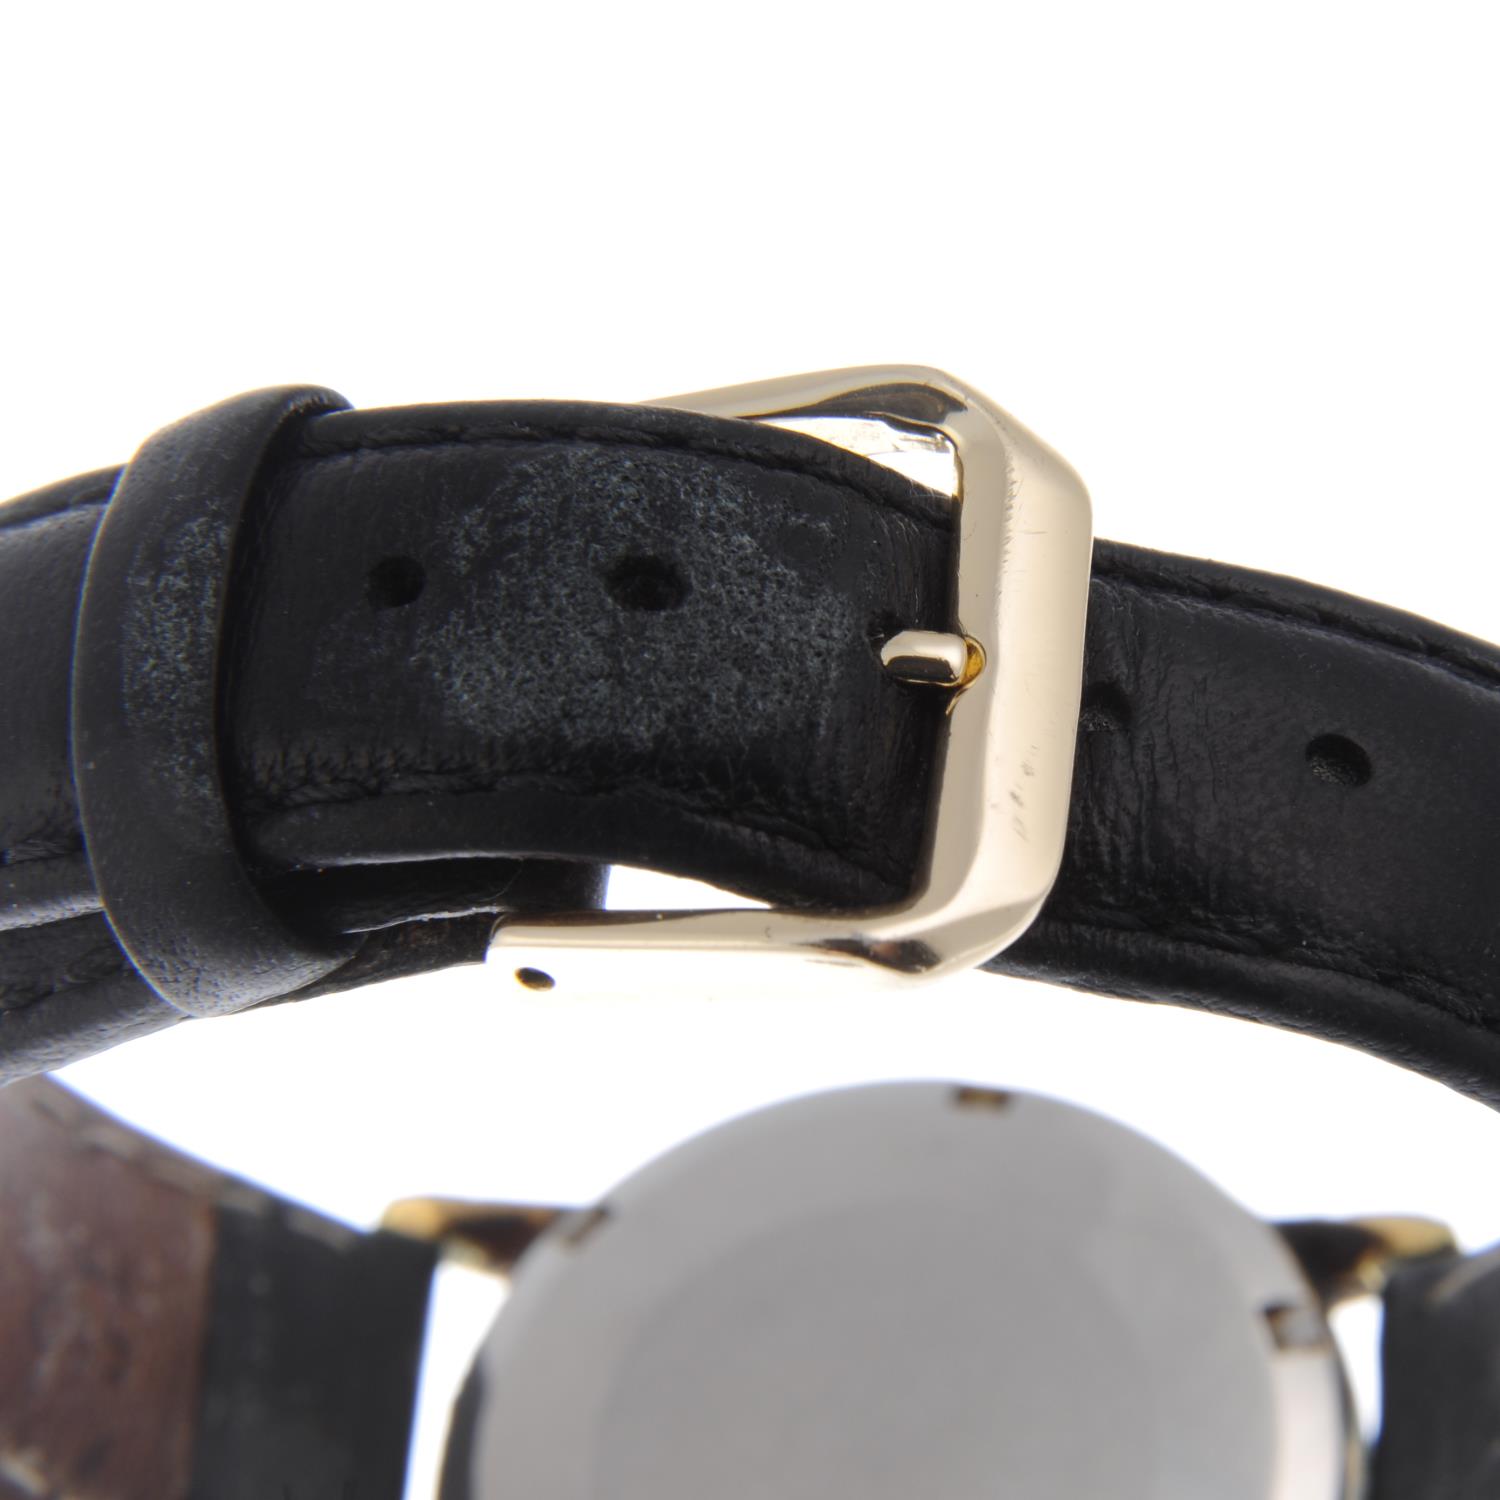 OMEGA - a gentleman's Genève wrist watch. - Image 2 of 4